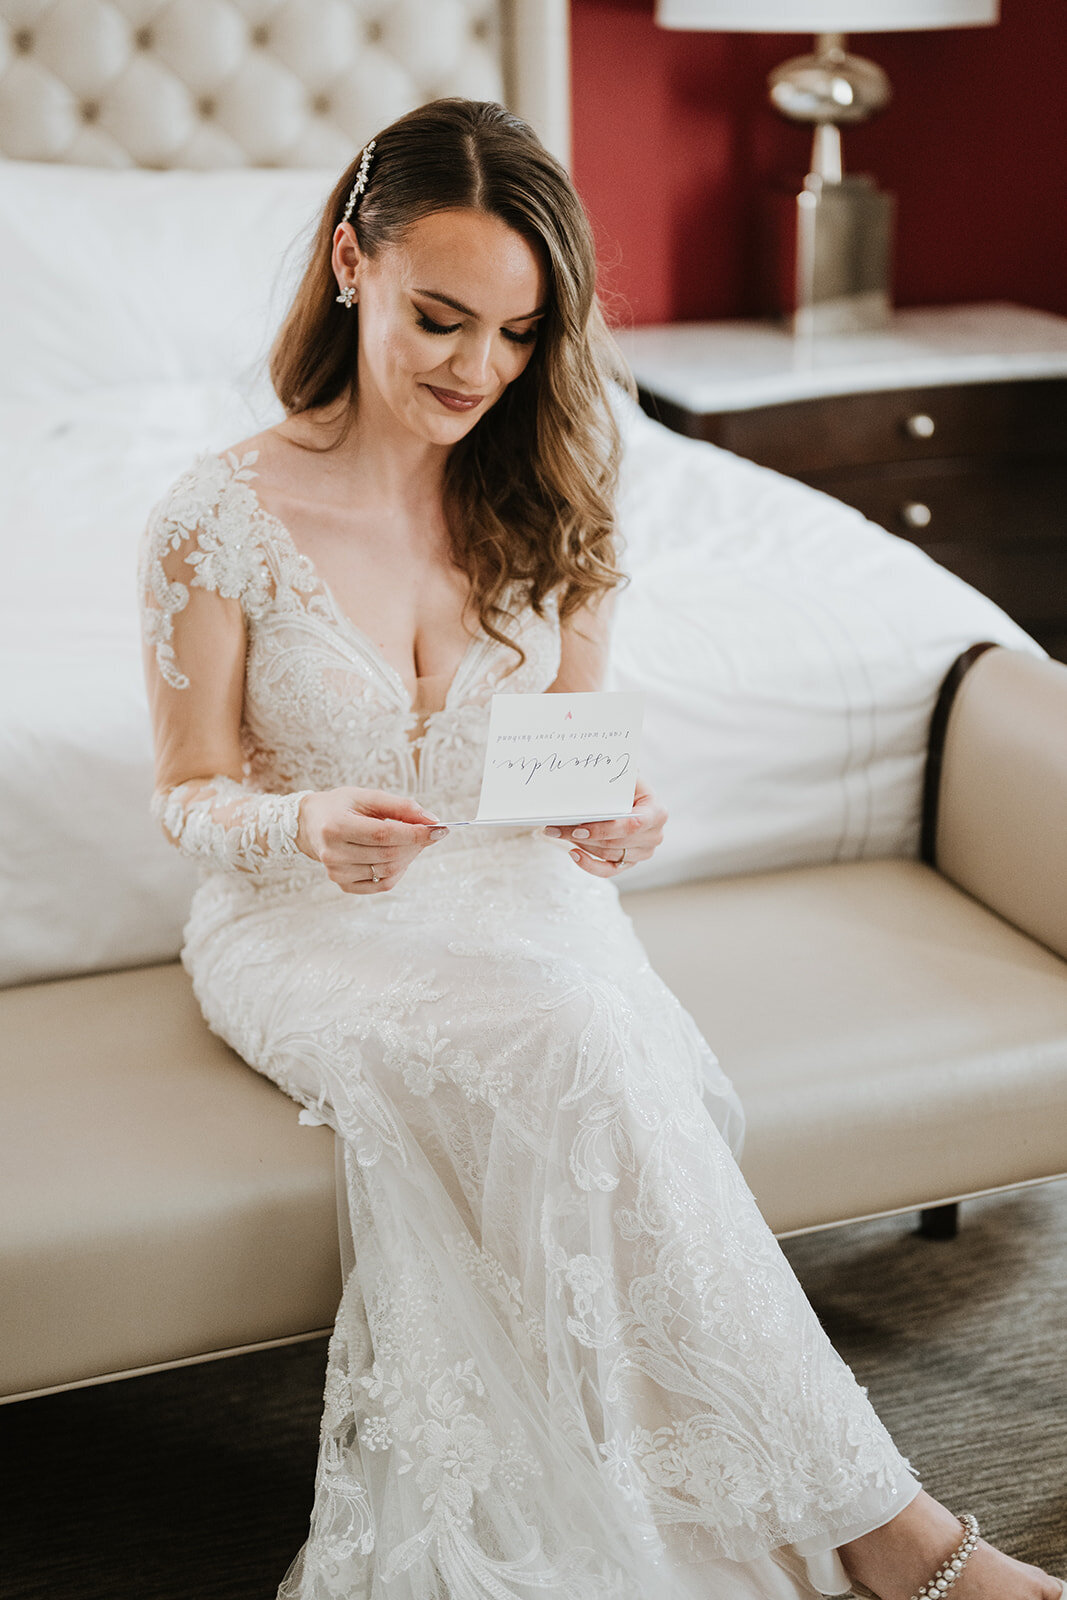 Bride Reading Letter